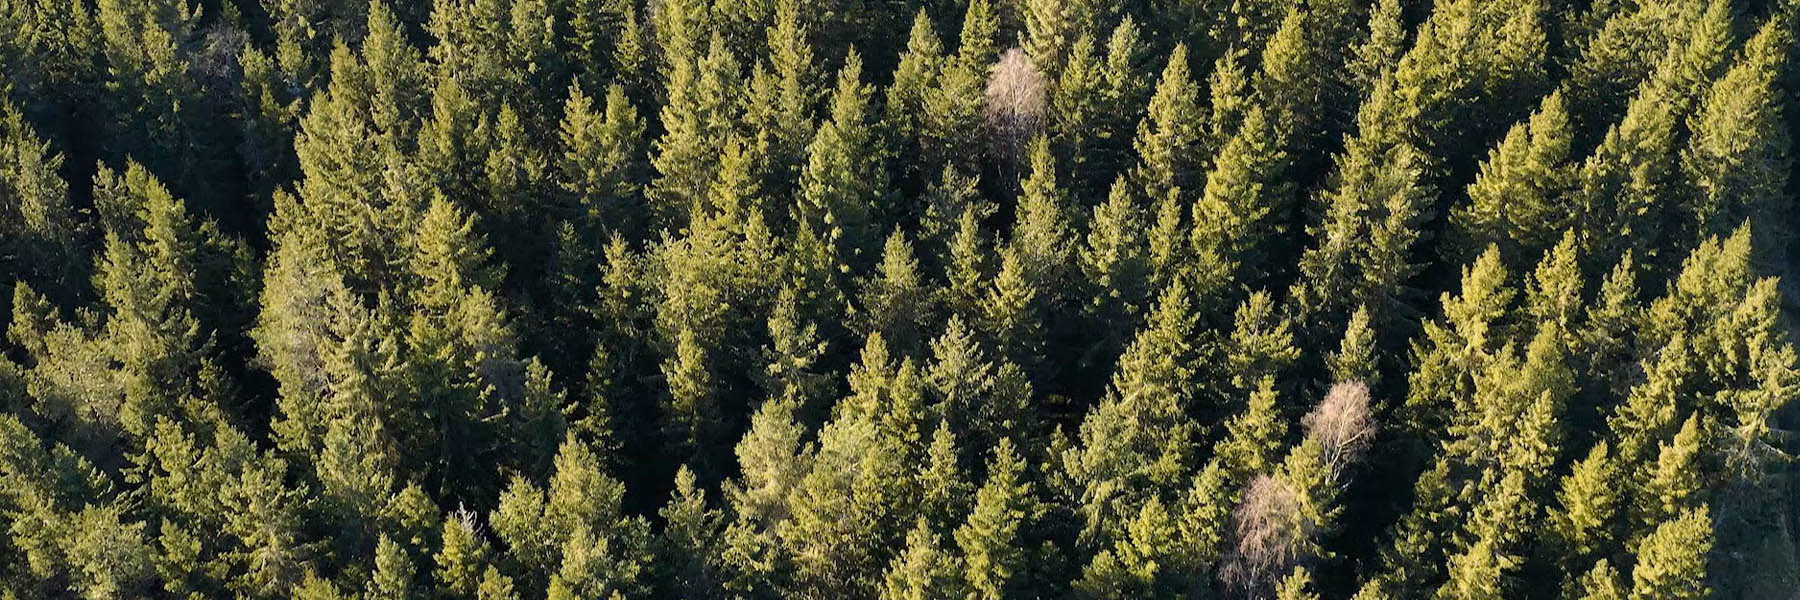 Skogforsk kompletterar med fakta till SVT:s ”Slaget om skogen”